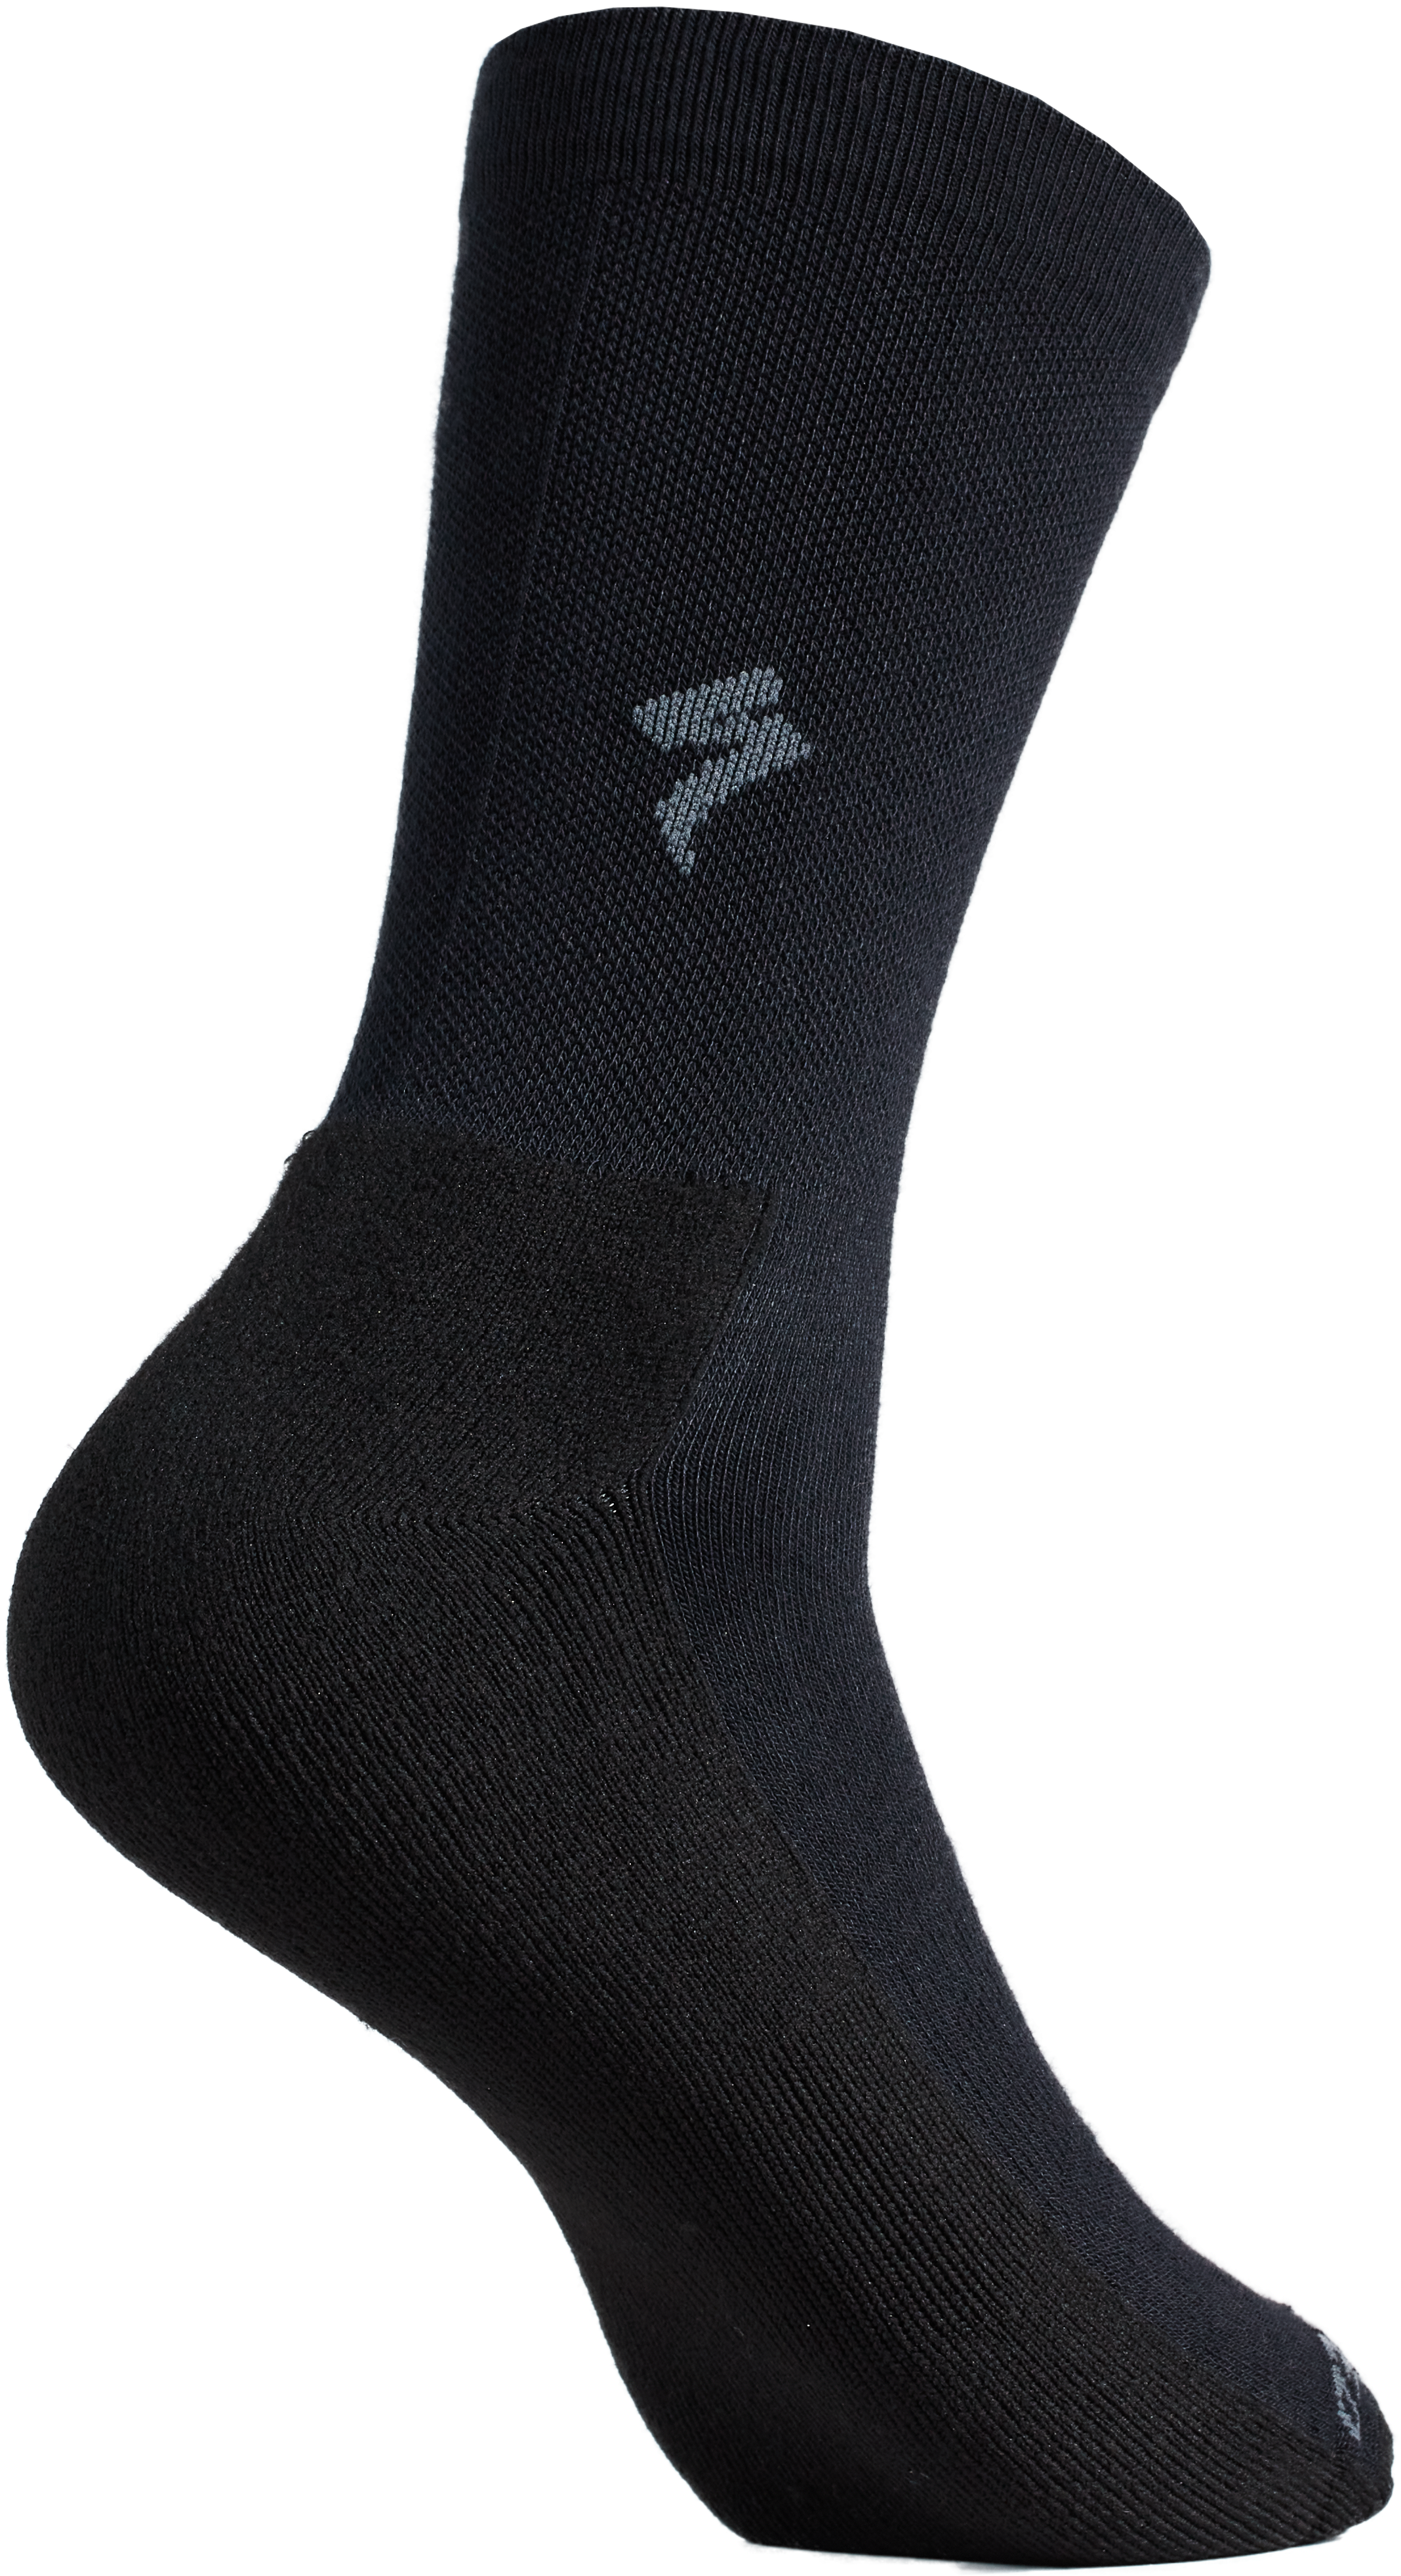 Specialized Primaloft Lightweight Tall Socks